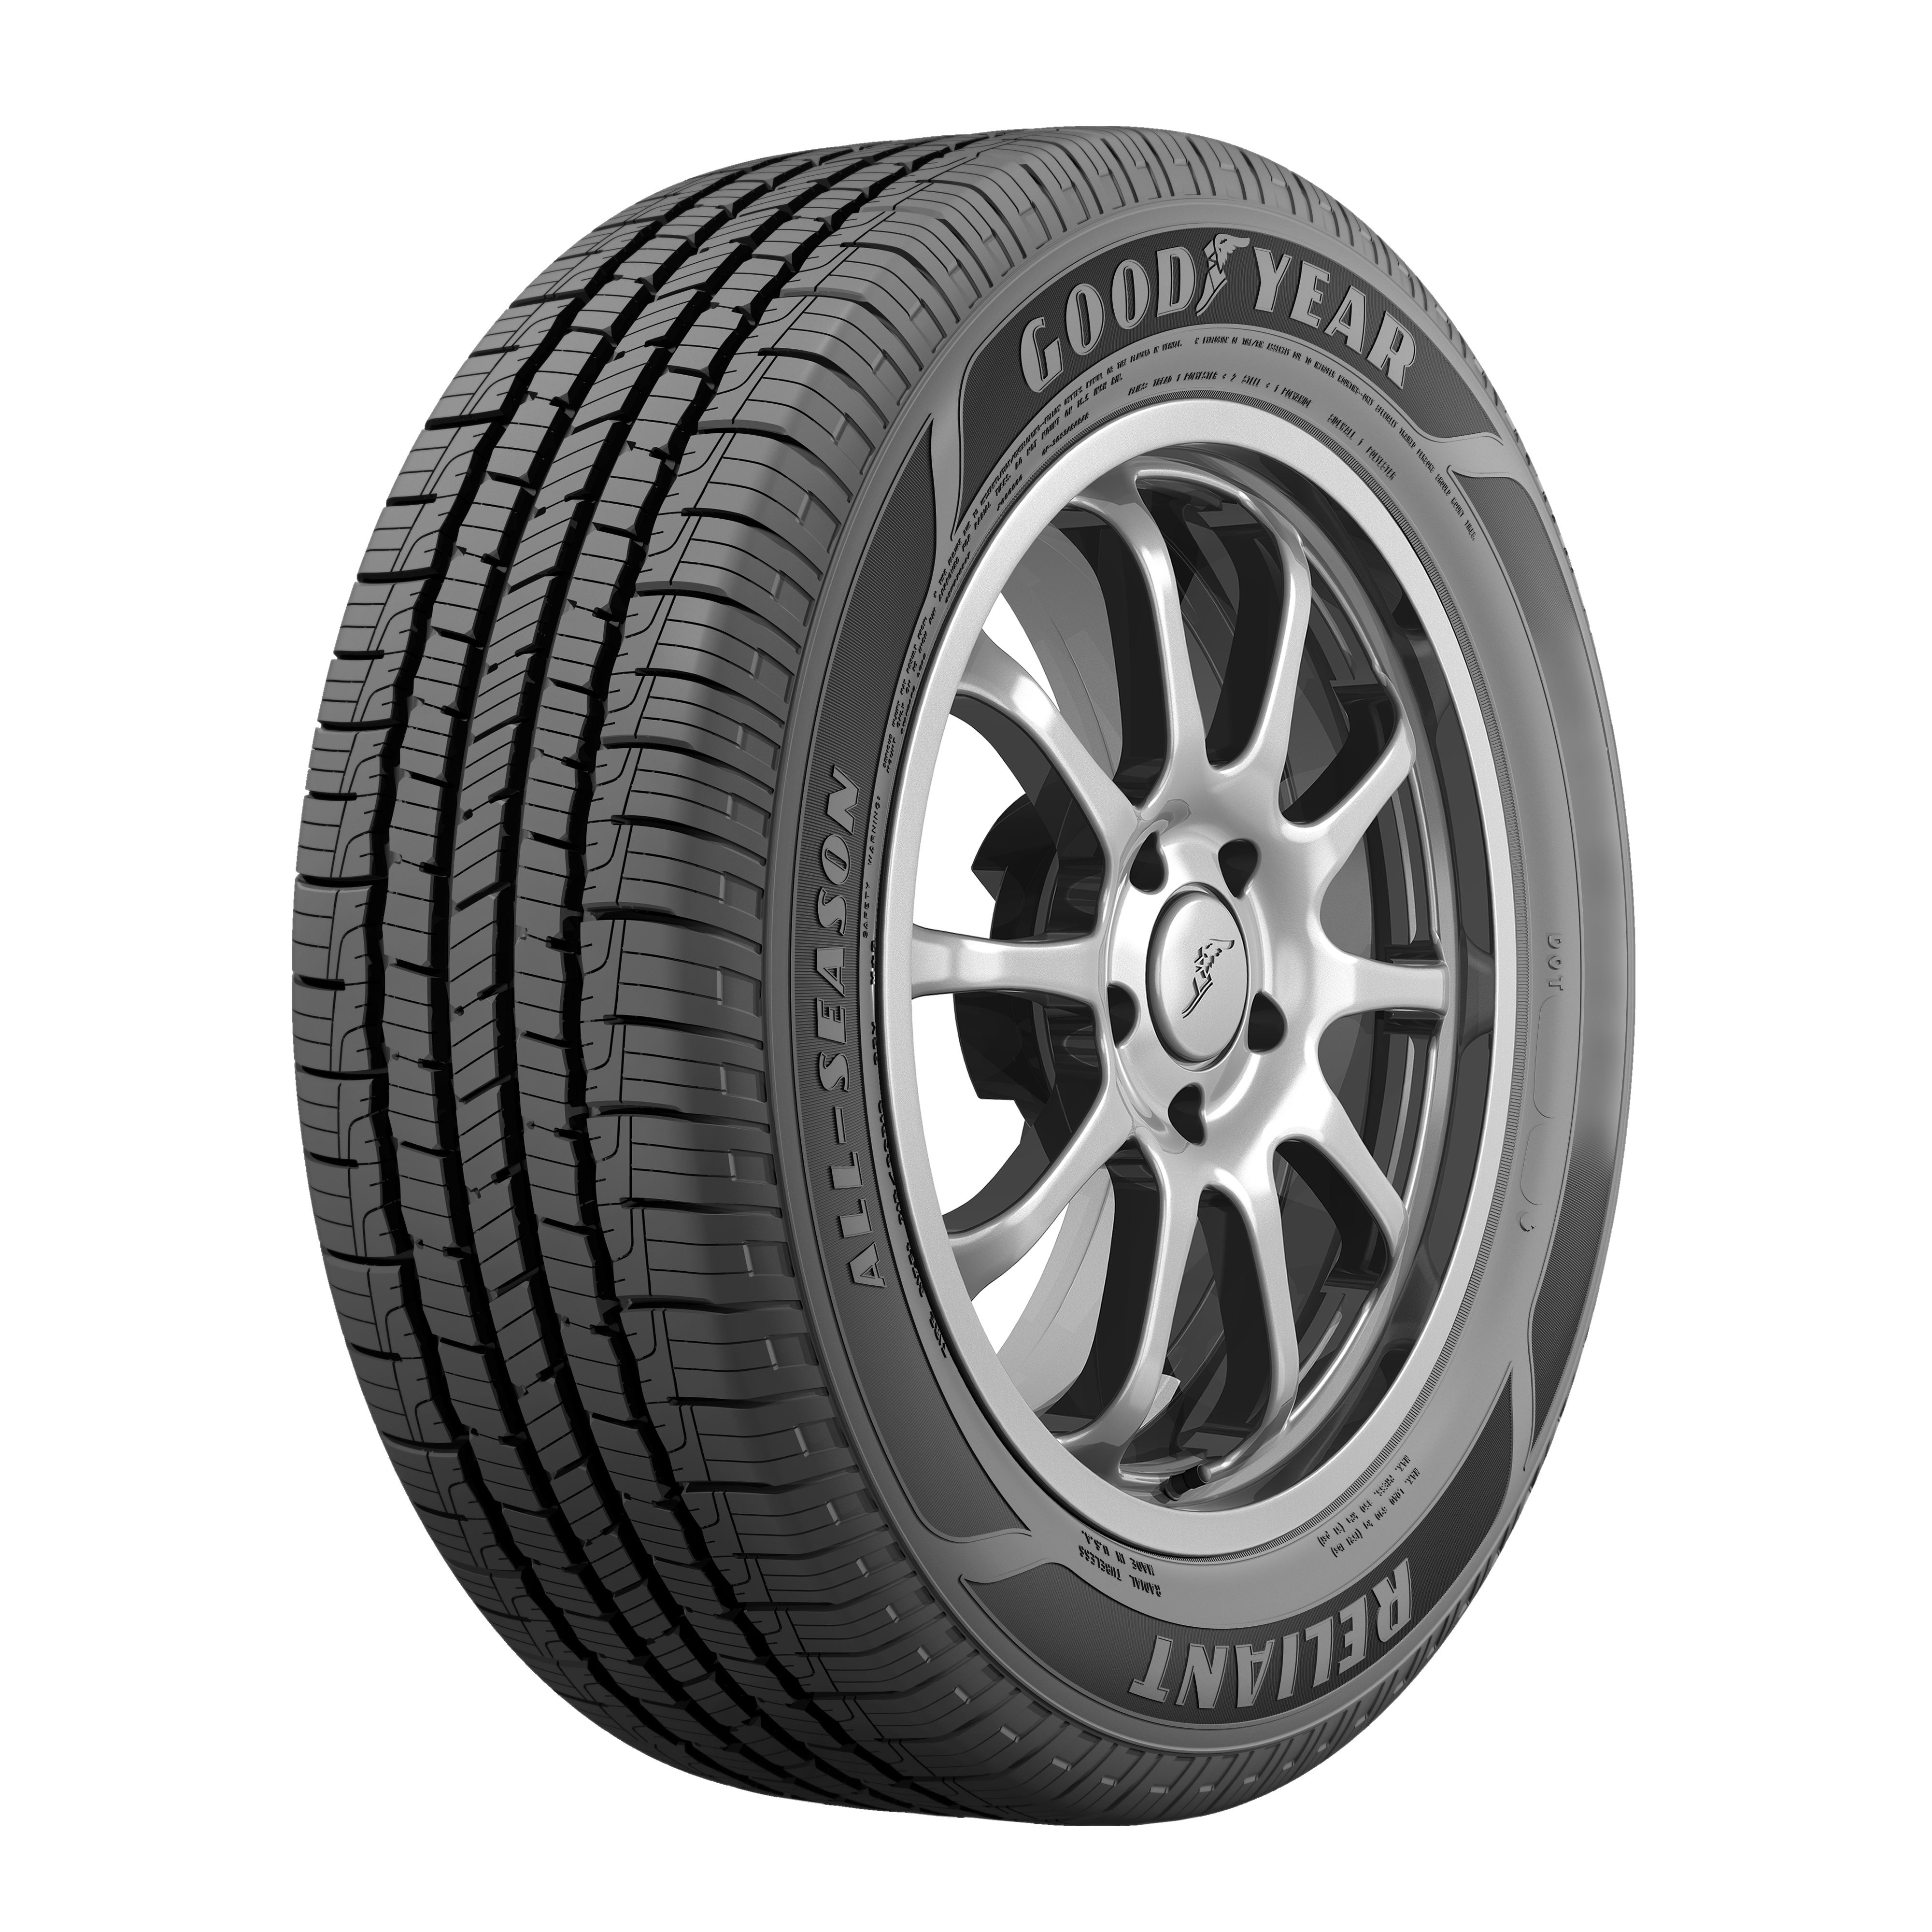 Goodyear Reliant All-Season 215/60R16 95V All-Season Passenger Car Tire - image 1 of 7